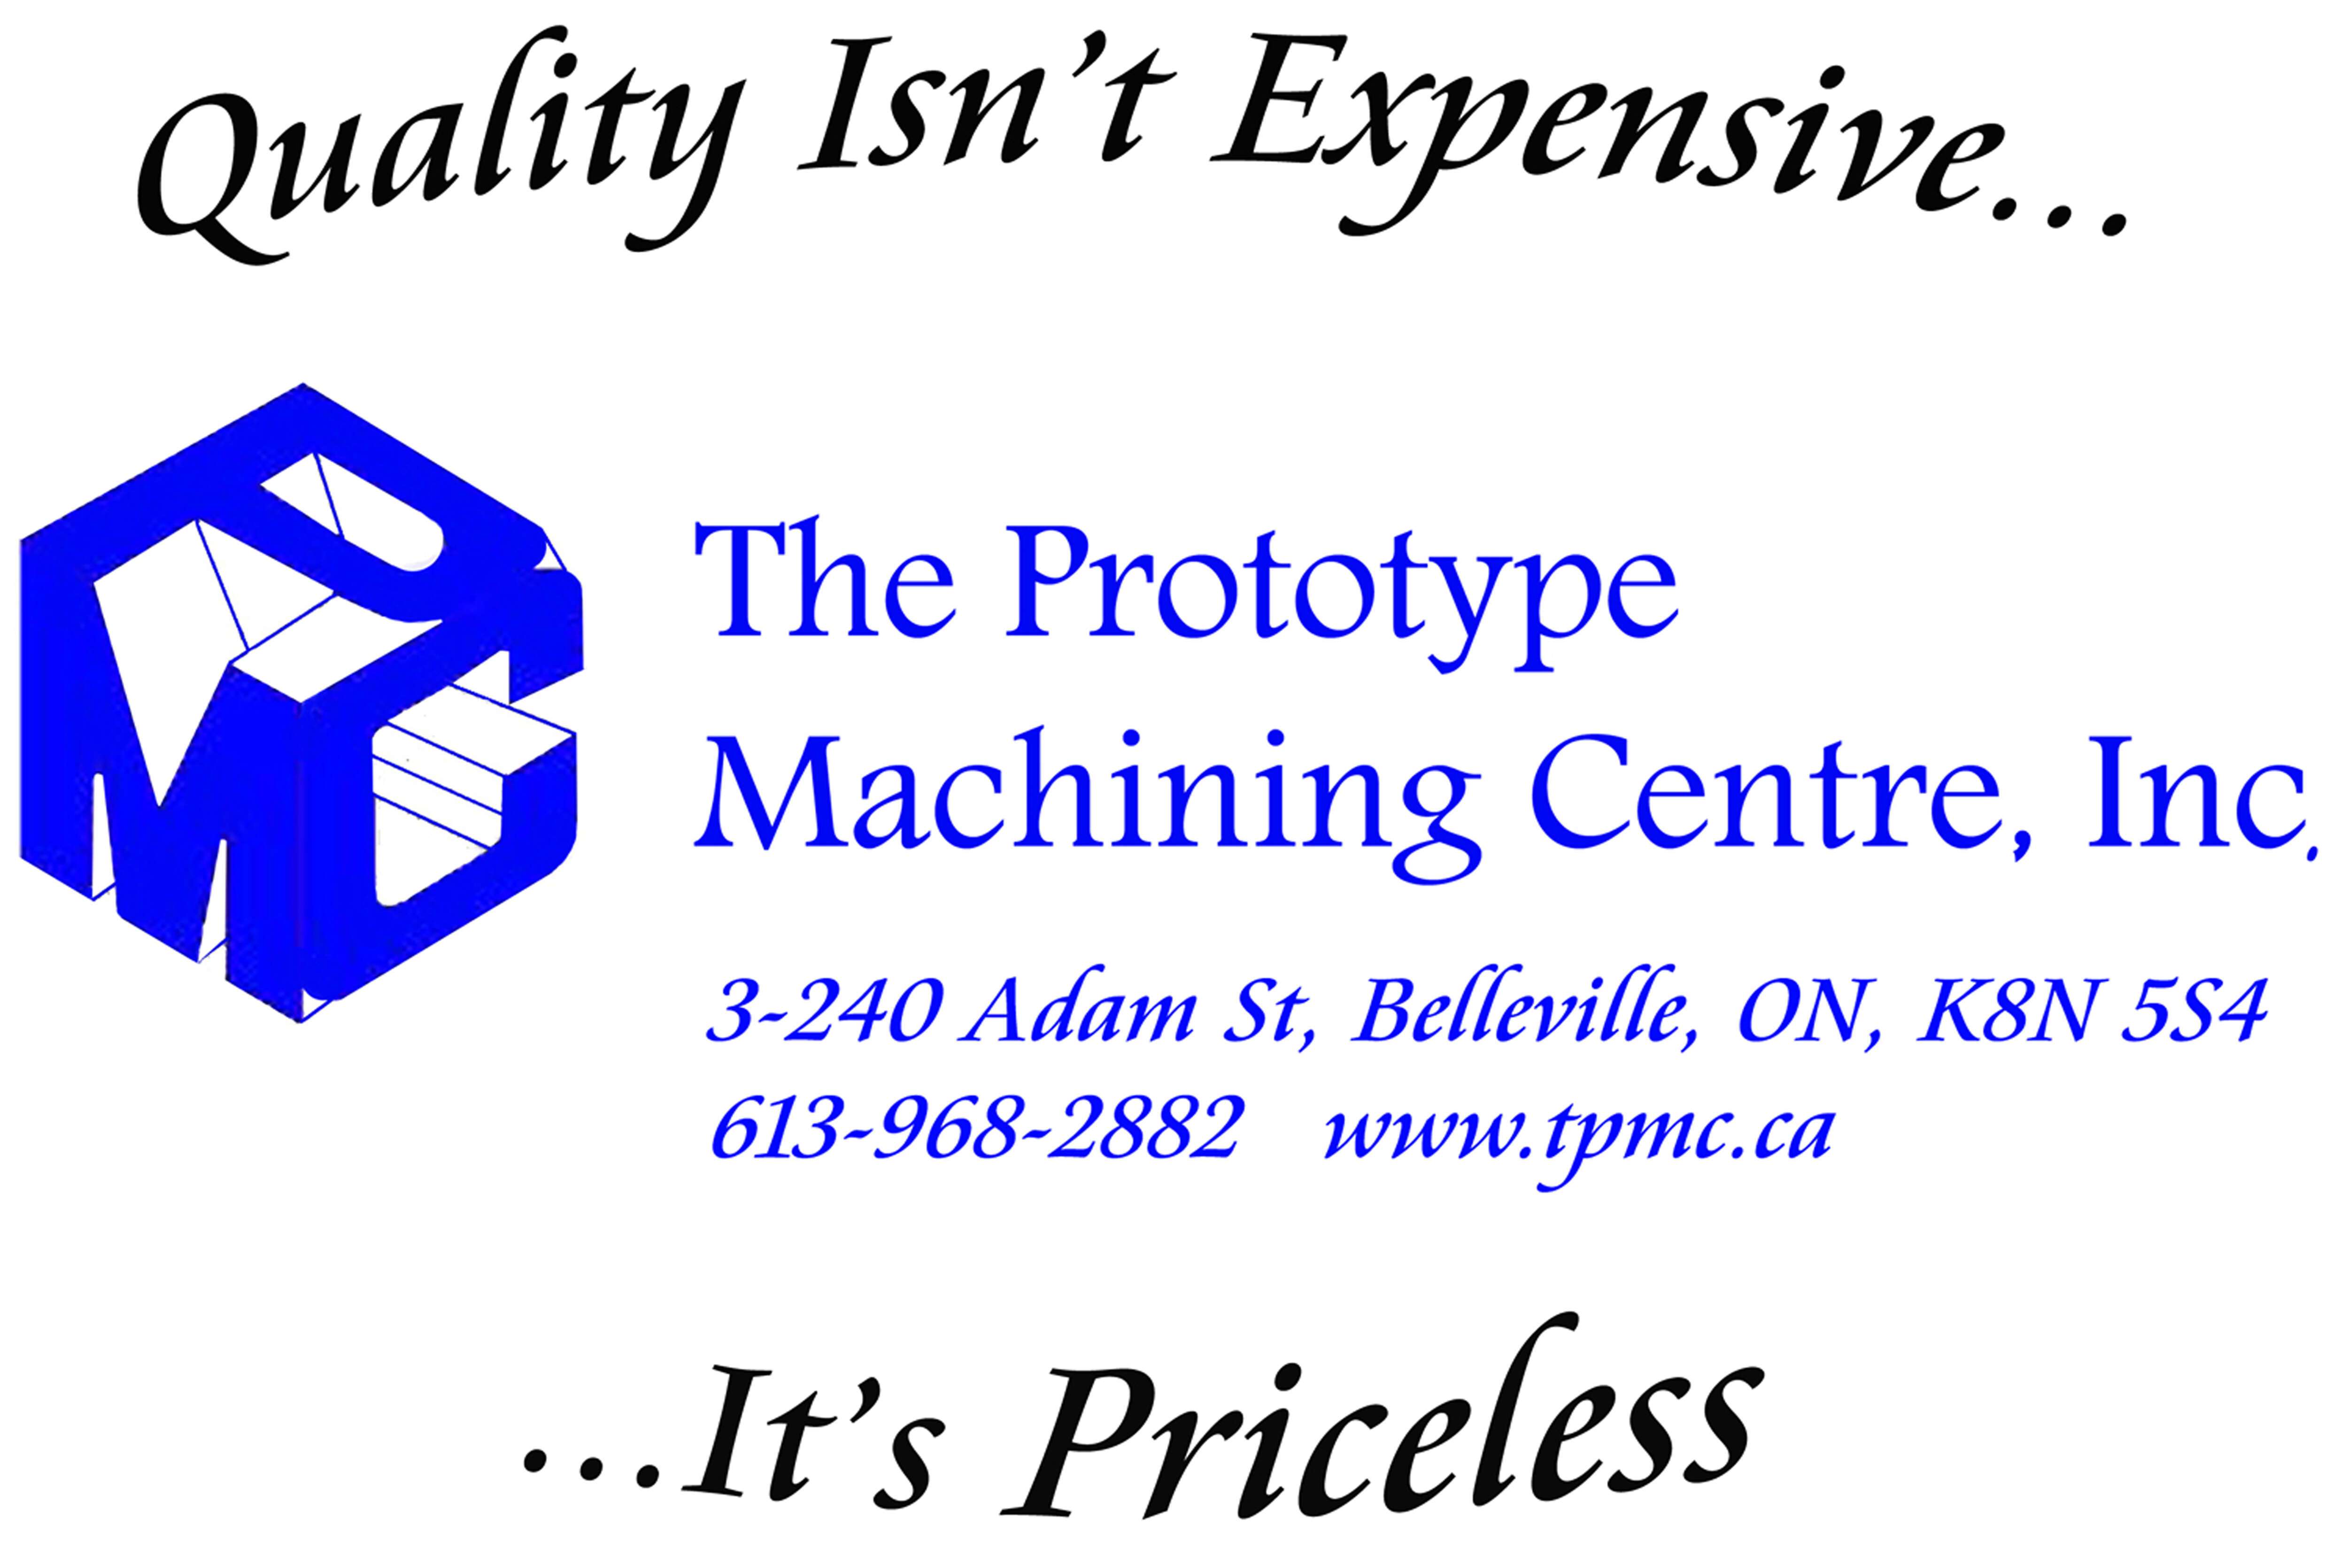 The Prototype Machining Centre